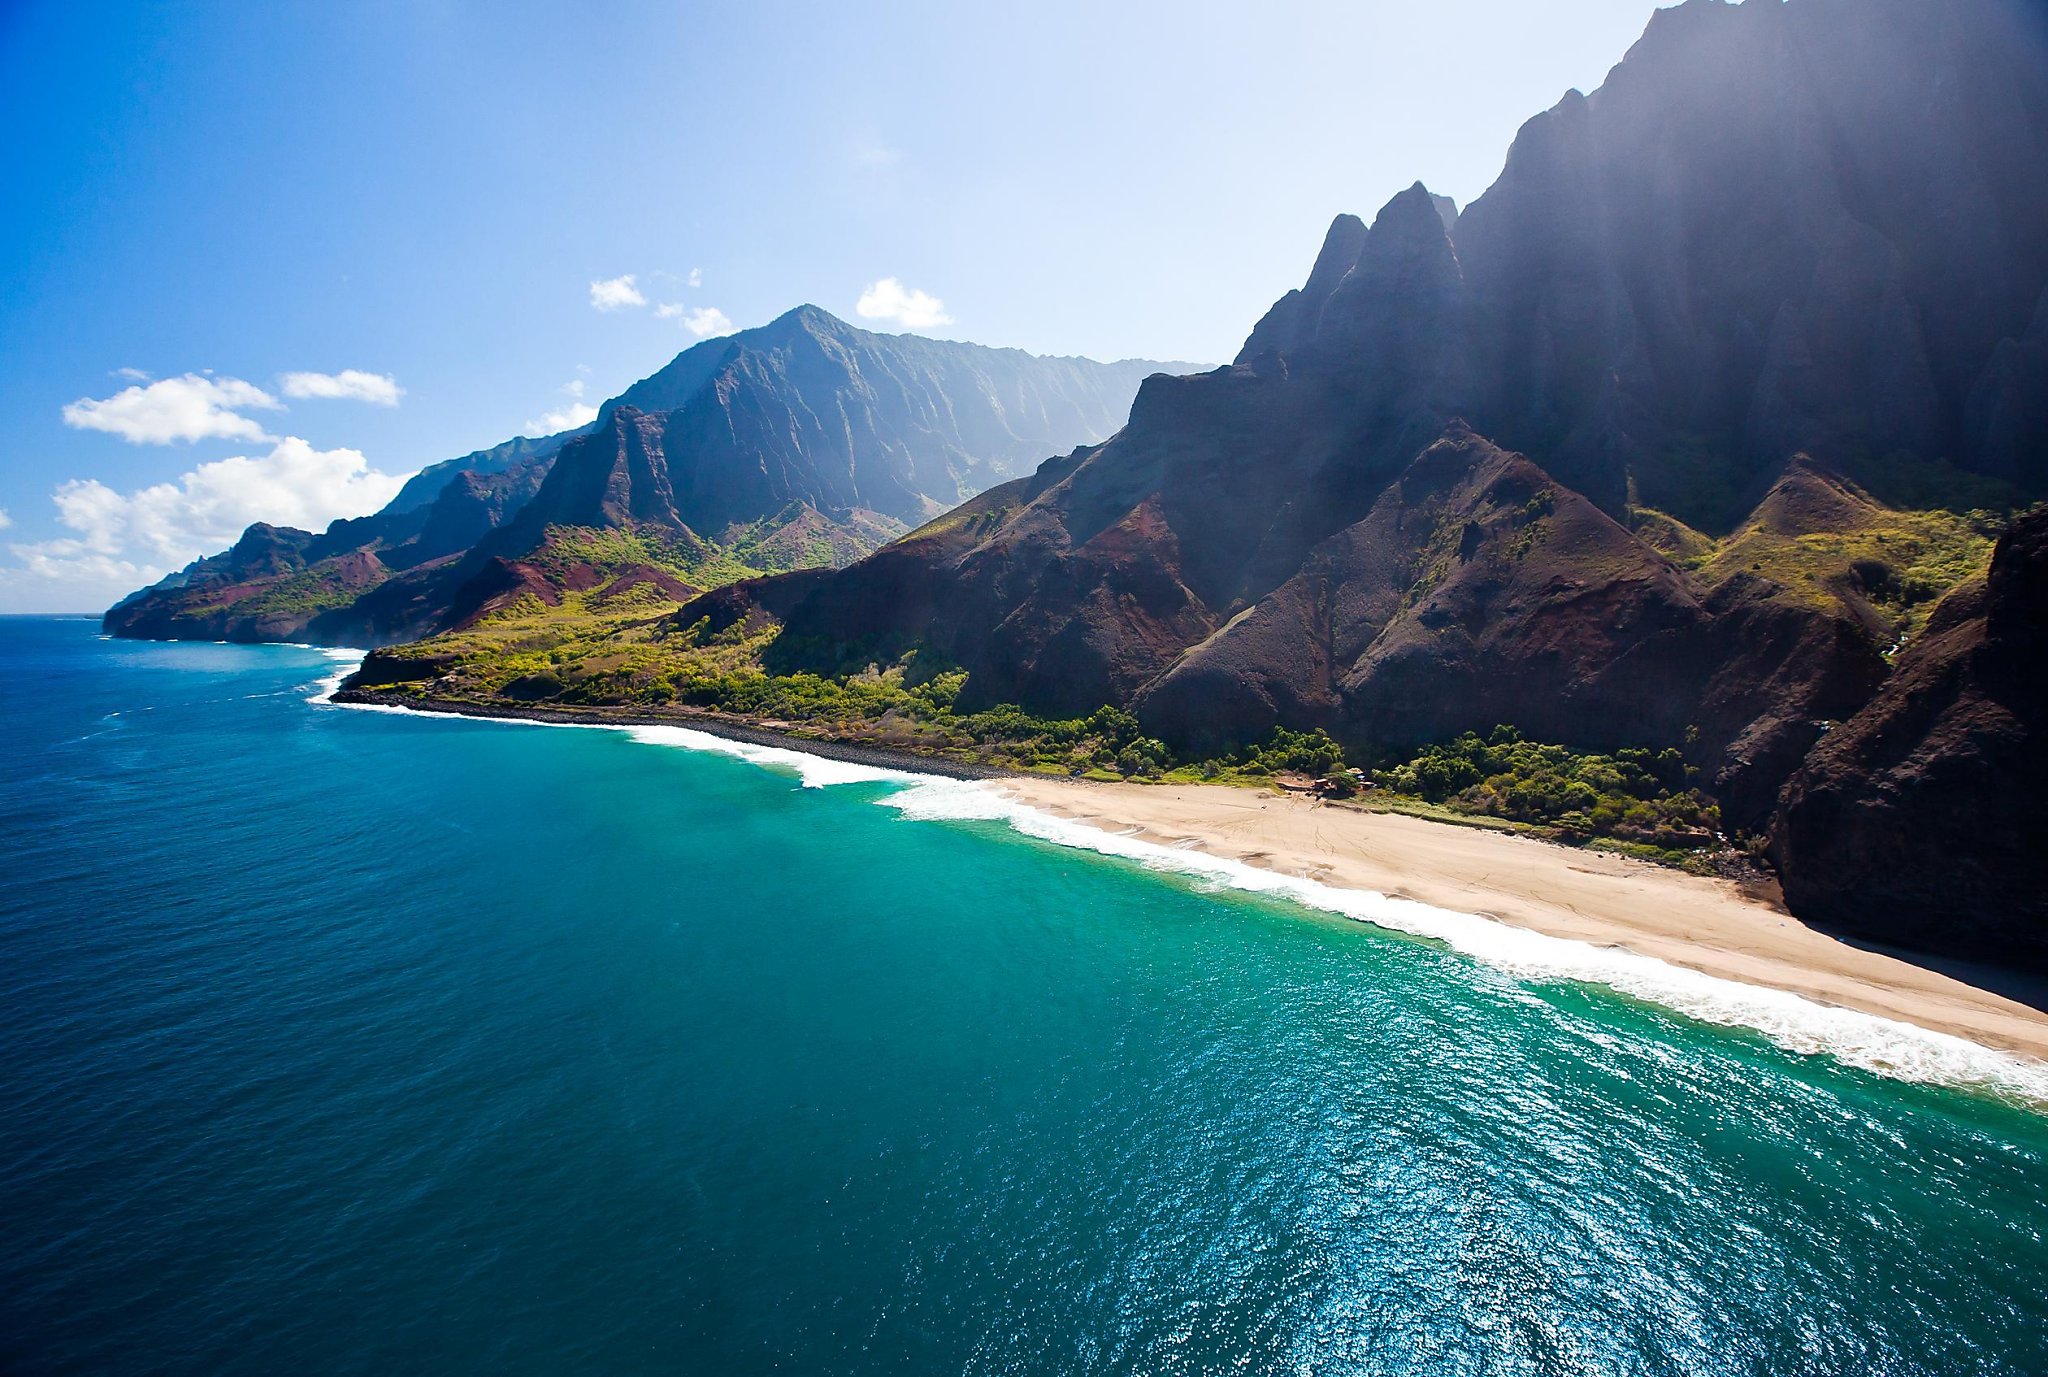 Can Kauai’s new tourism plan save Hawaii? - SFChronicle.com